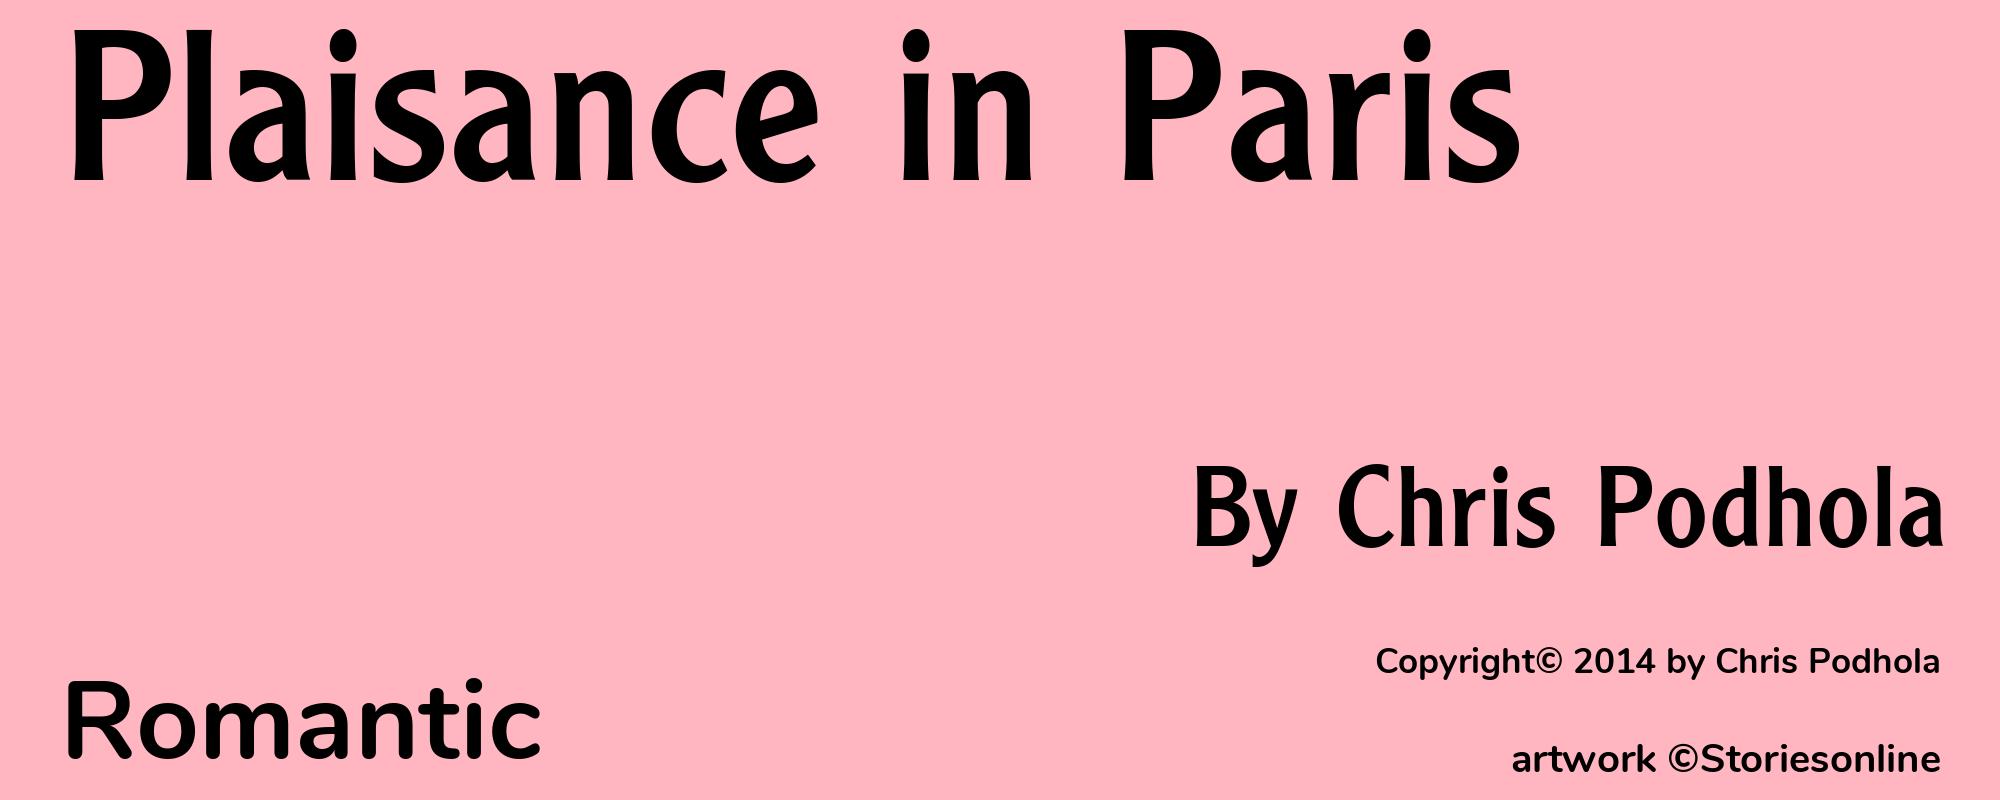 Plaisance in Paris - Cover